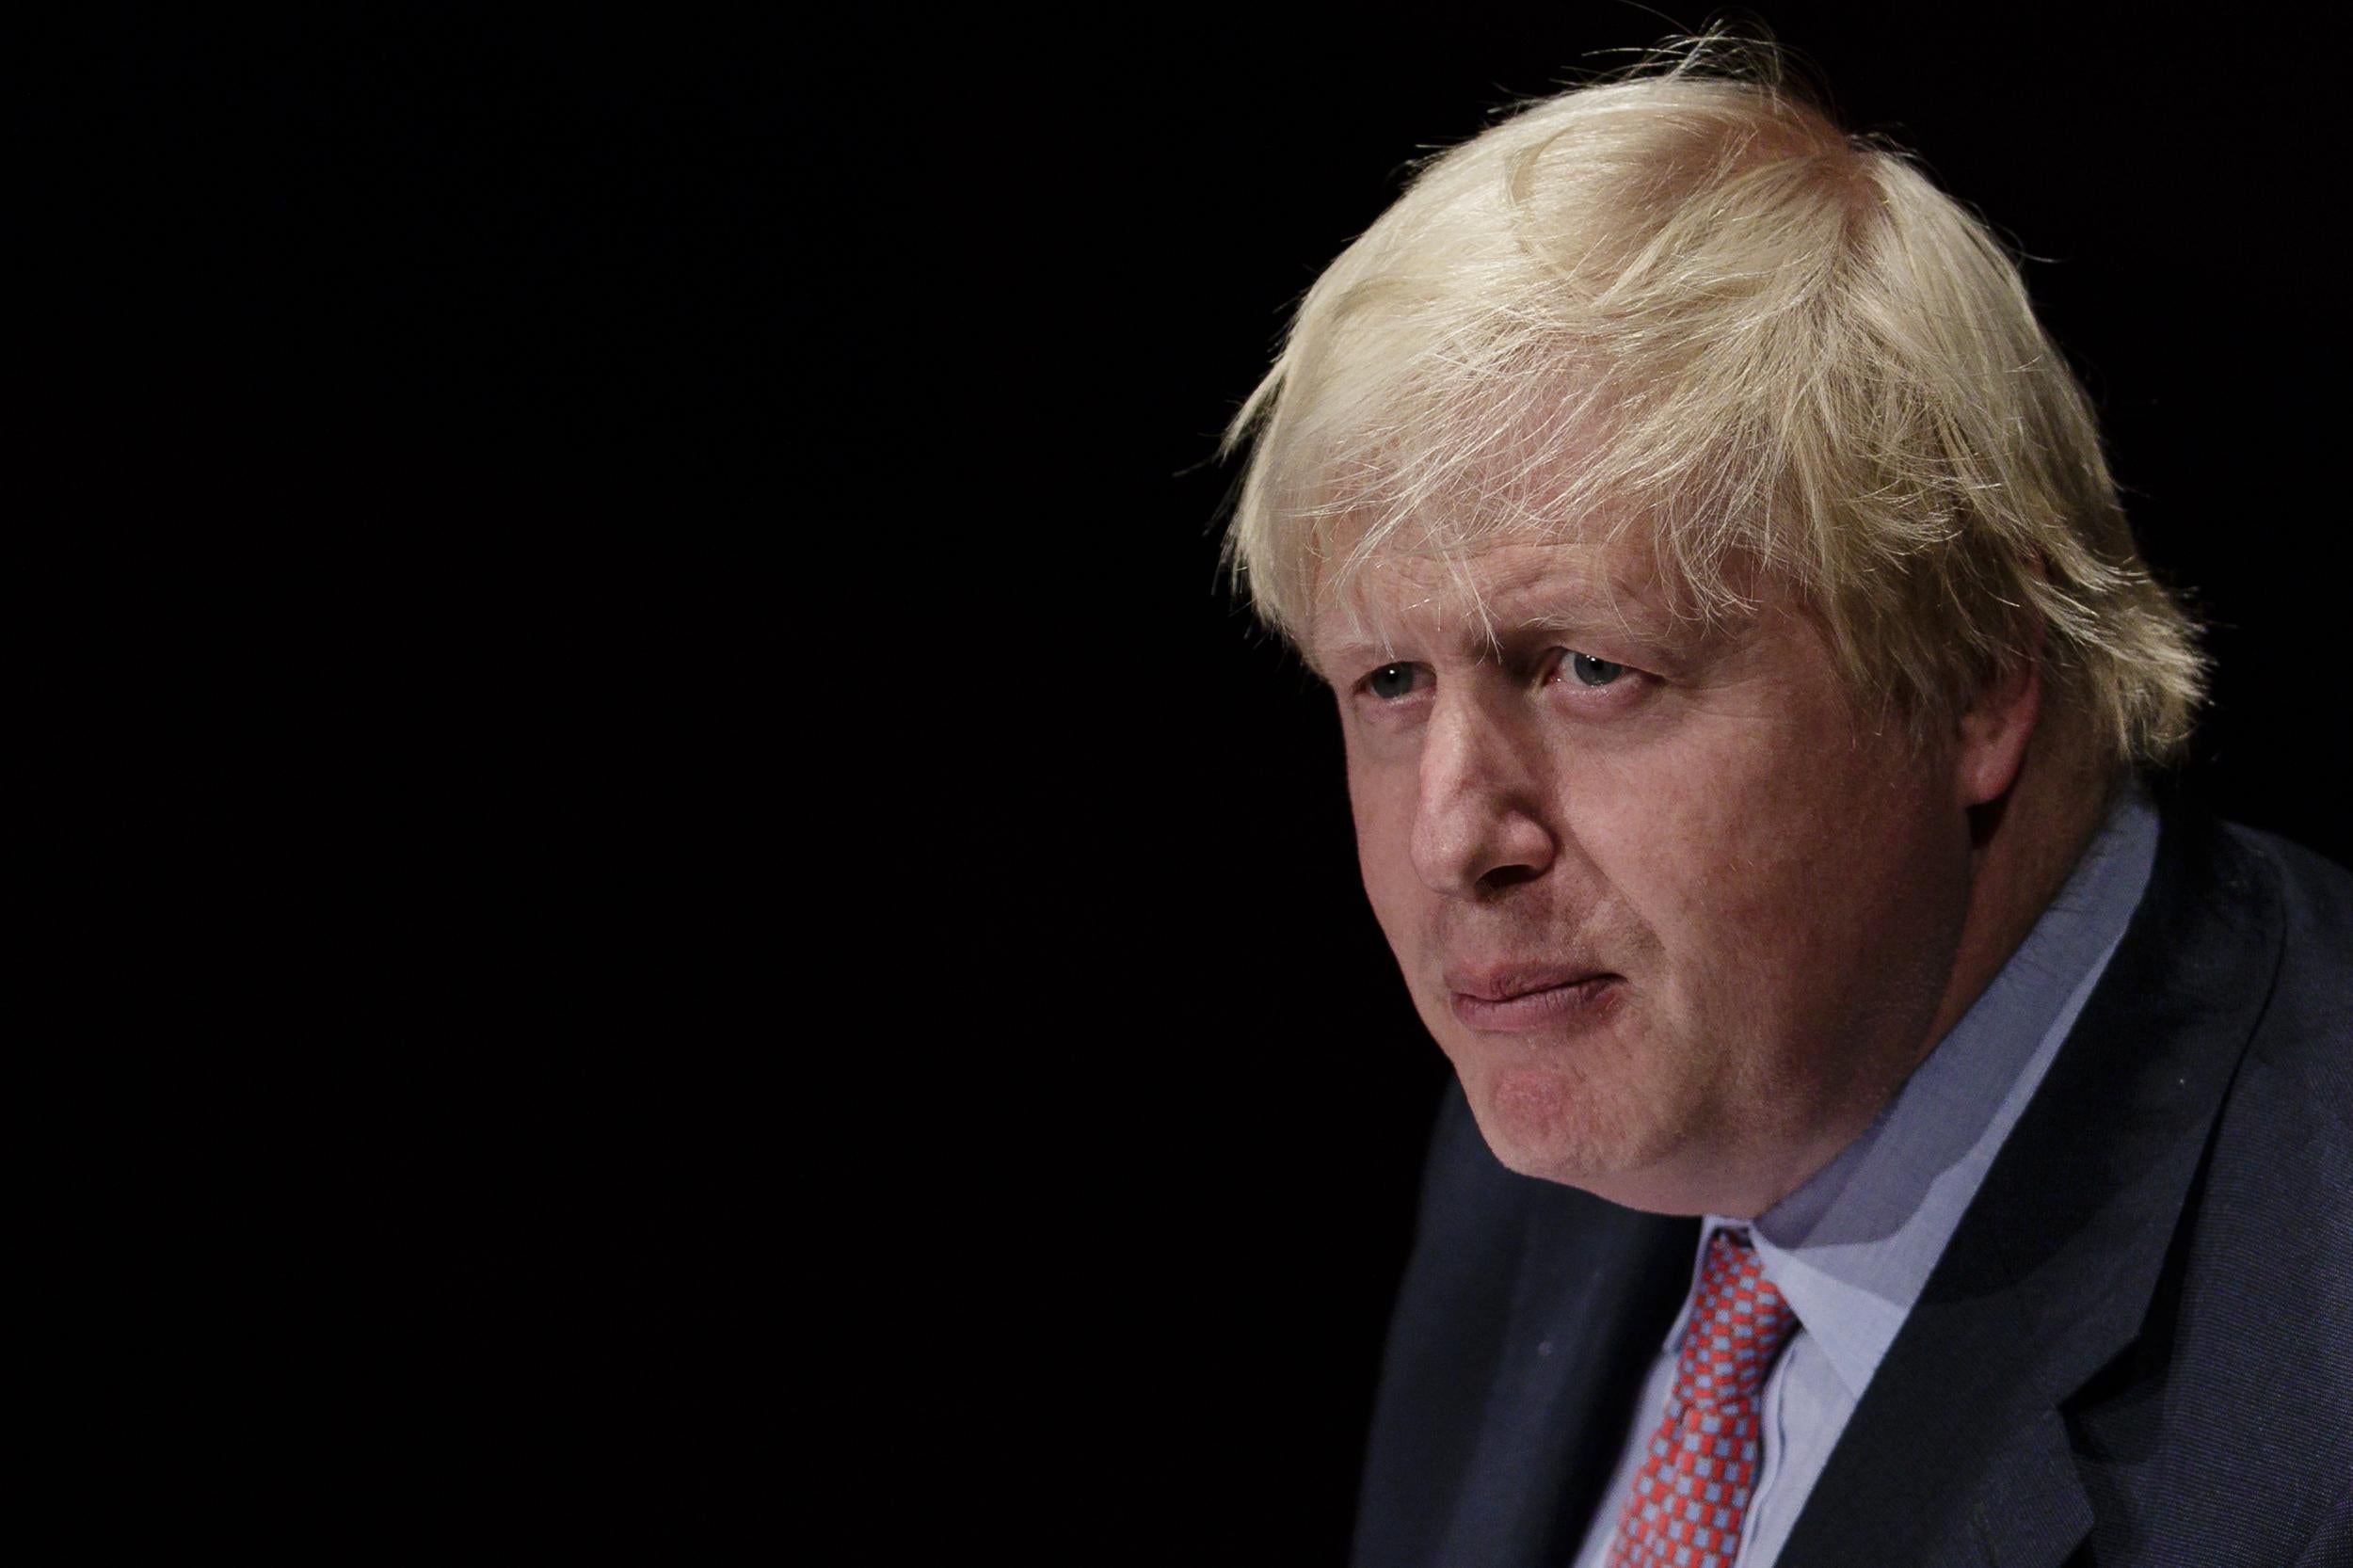 Foreign Secretary Boris Johnson has consulted Gerard Lyons on economic policy